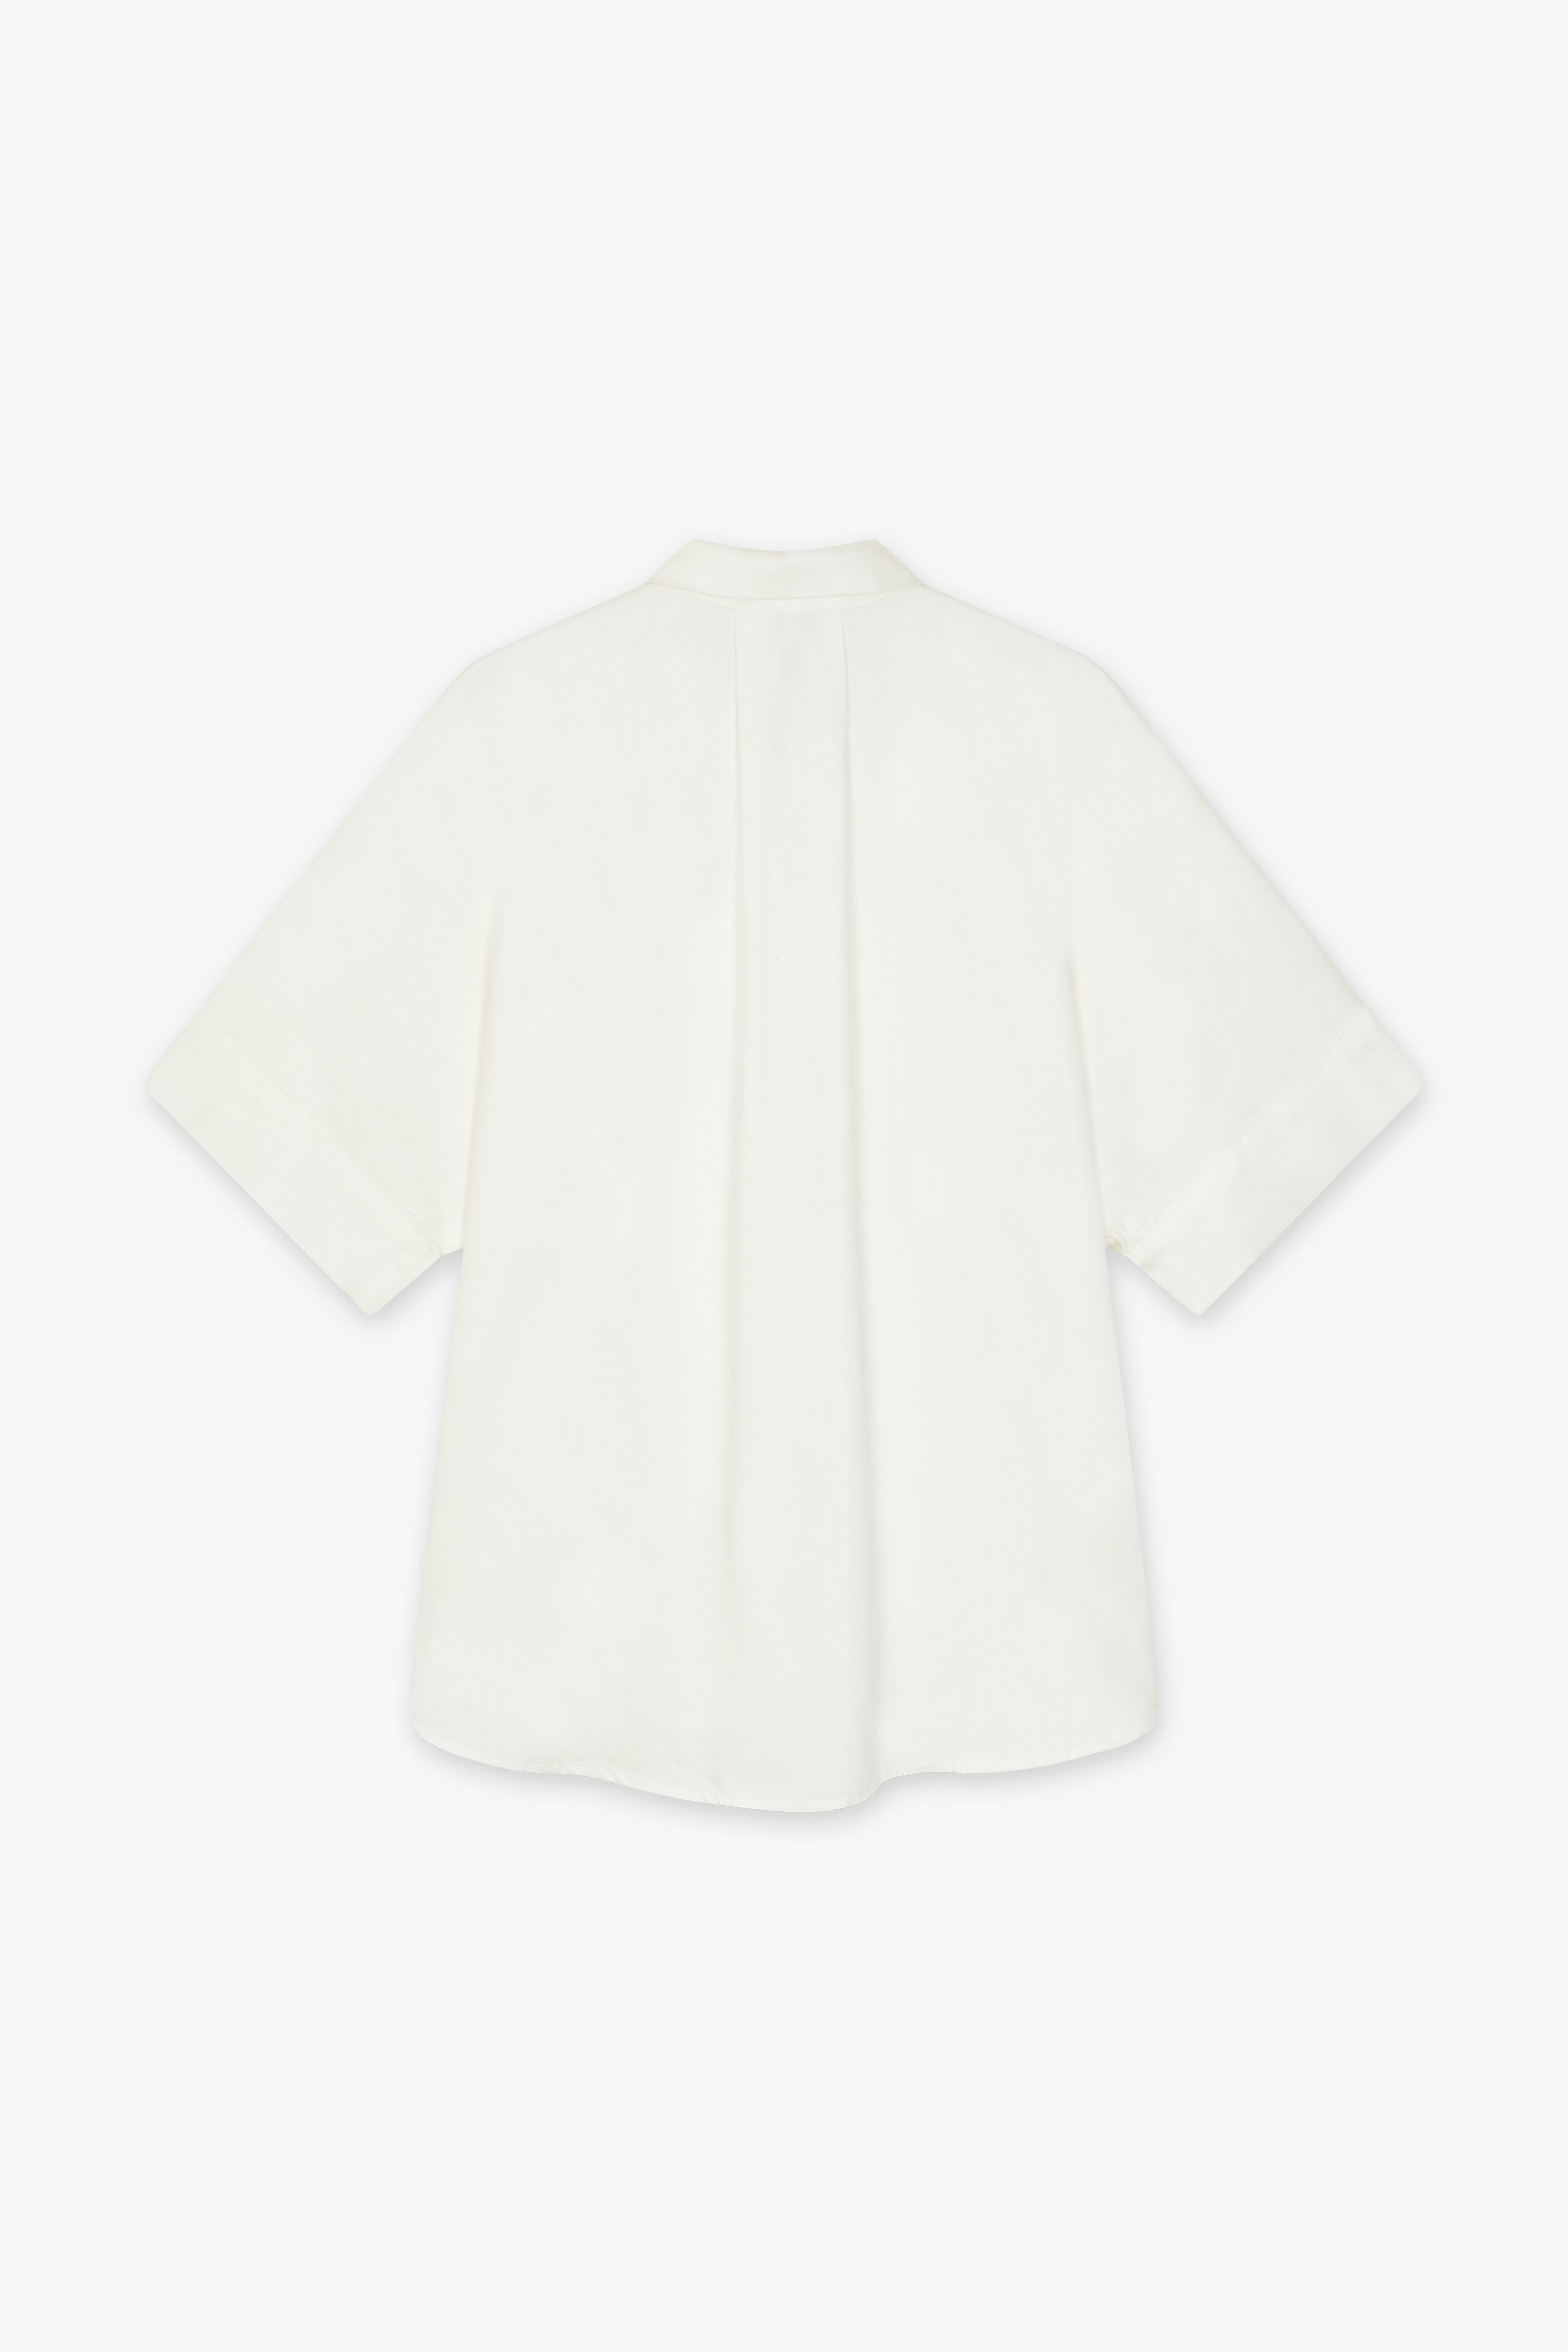 CKS Dames - SELAH - blouse korte mouwen - wit